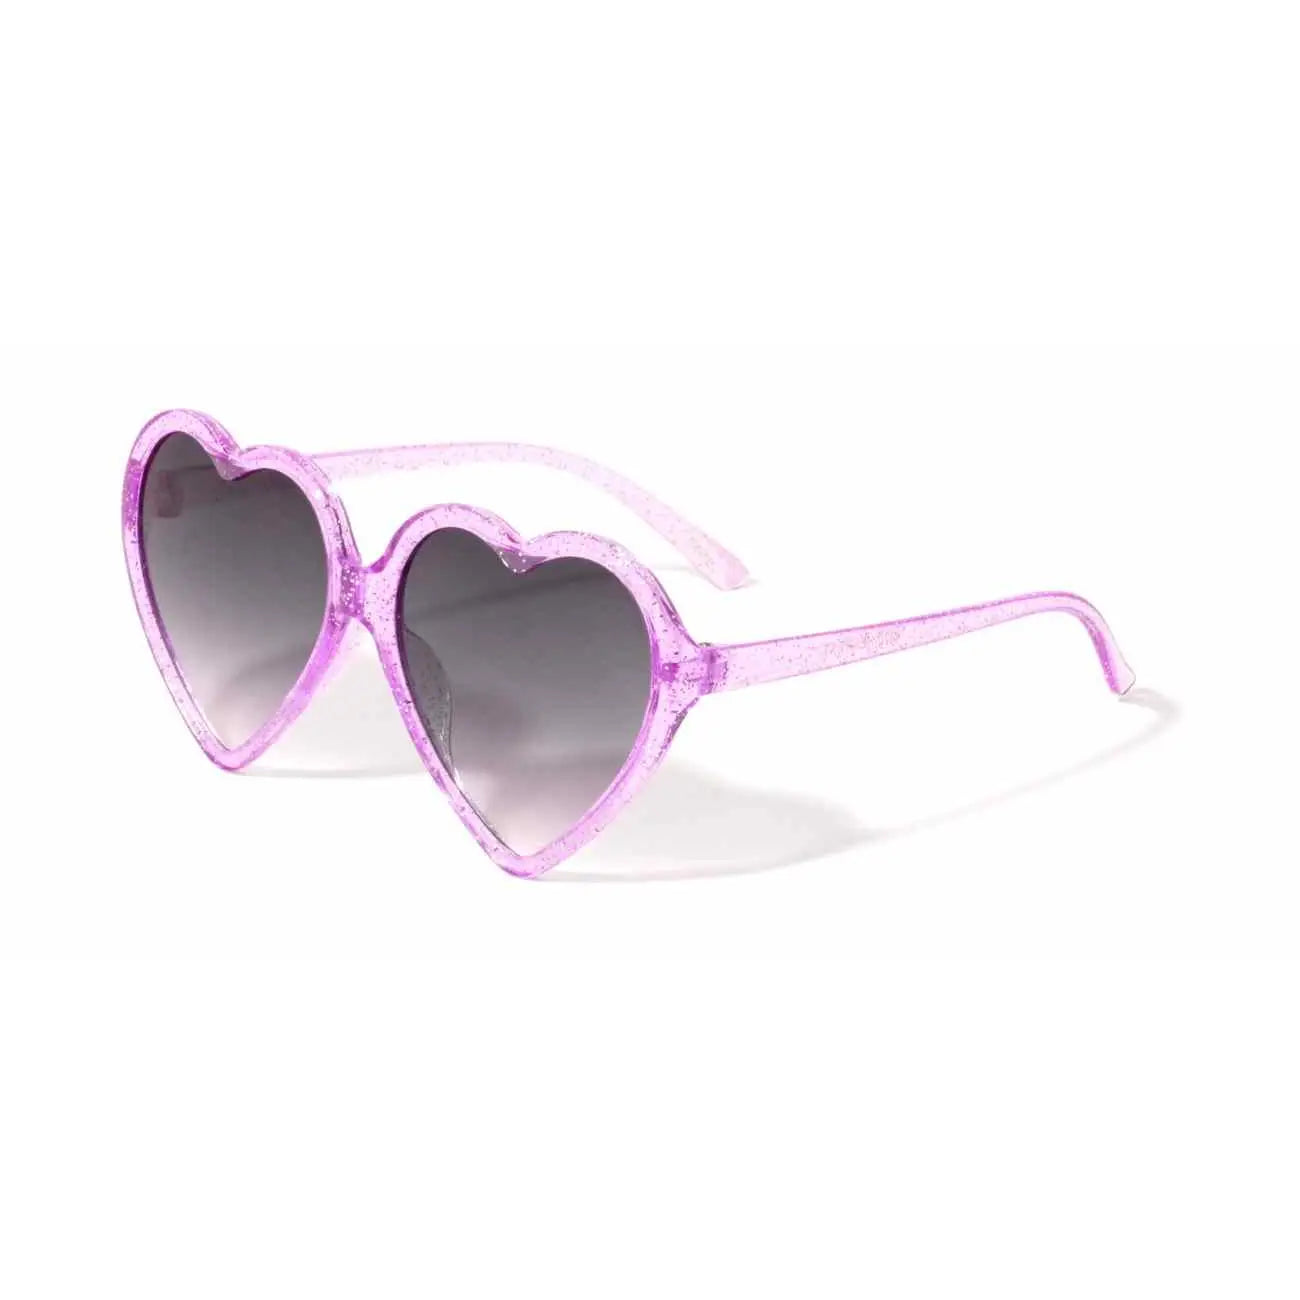 Kids Heart Sunglasses - Marisa's Shopping Network 